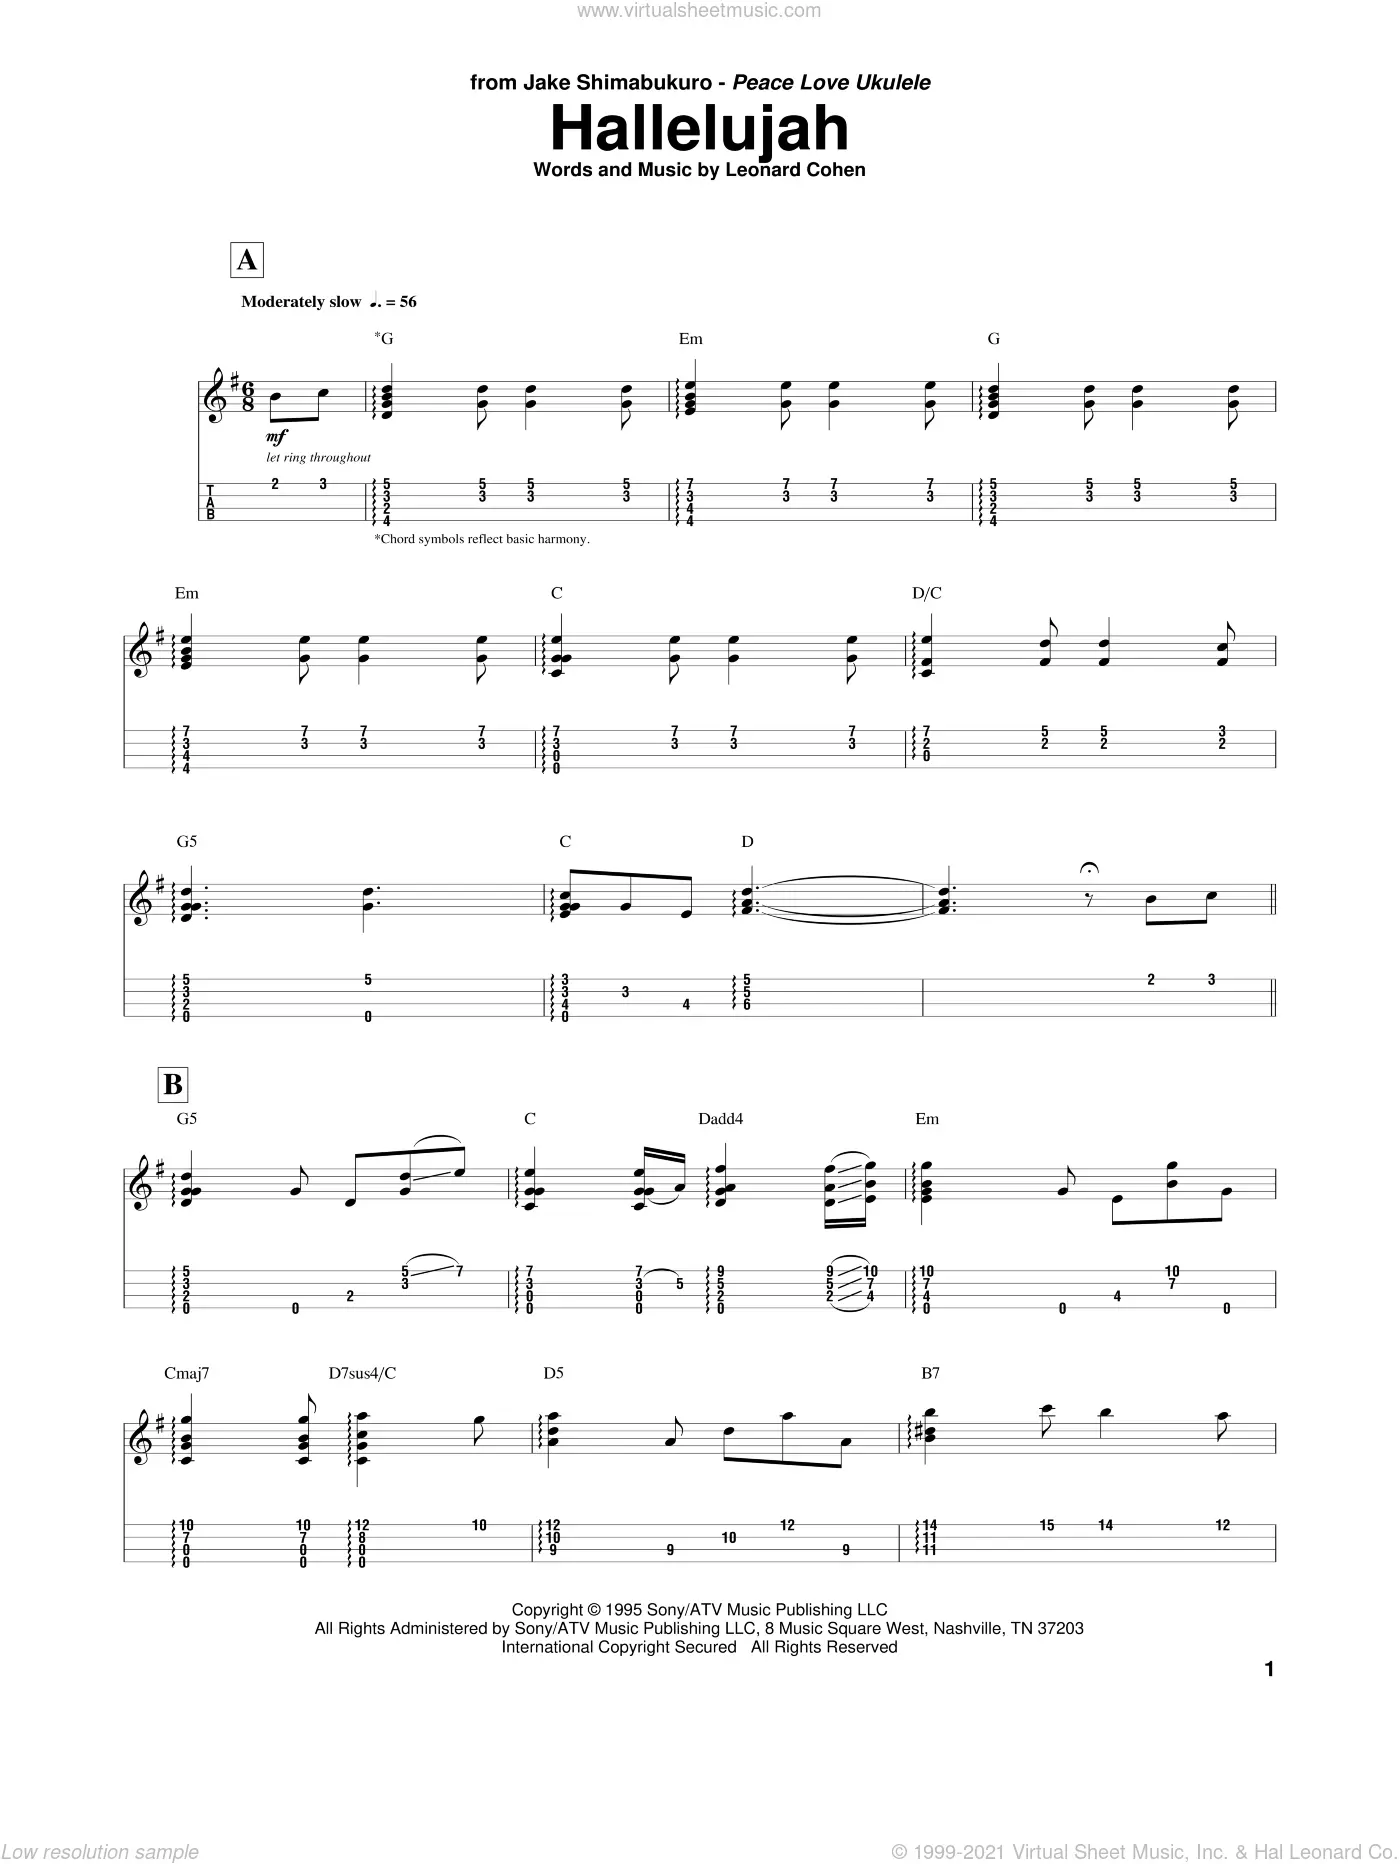 Digital Sheet Music of alleluia / for Ukulele